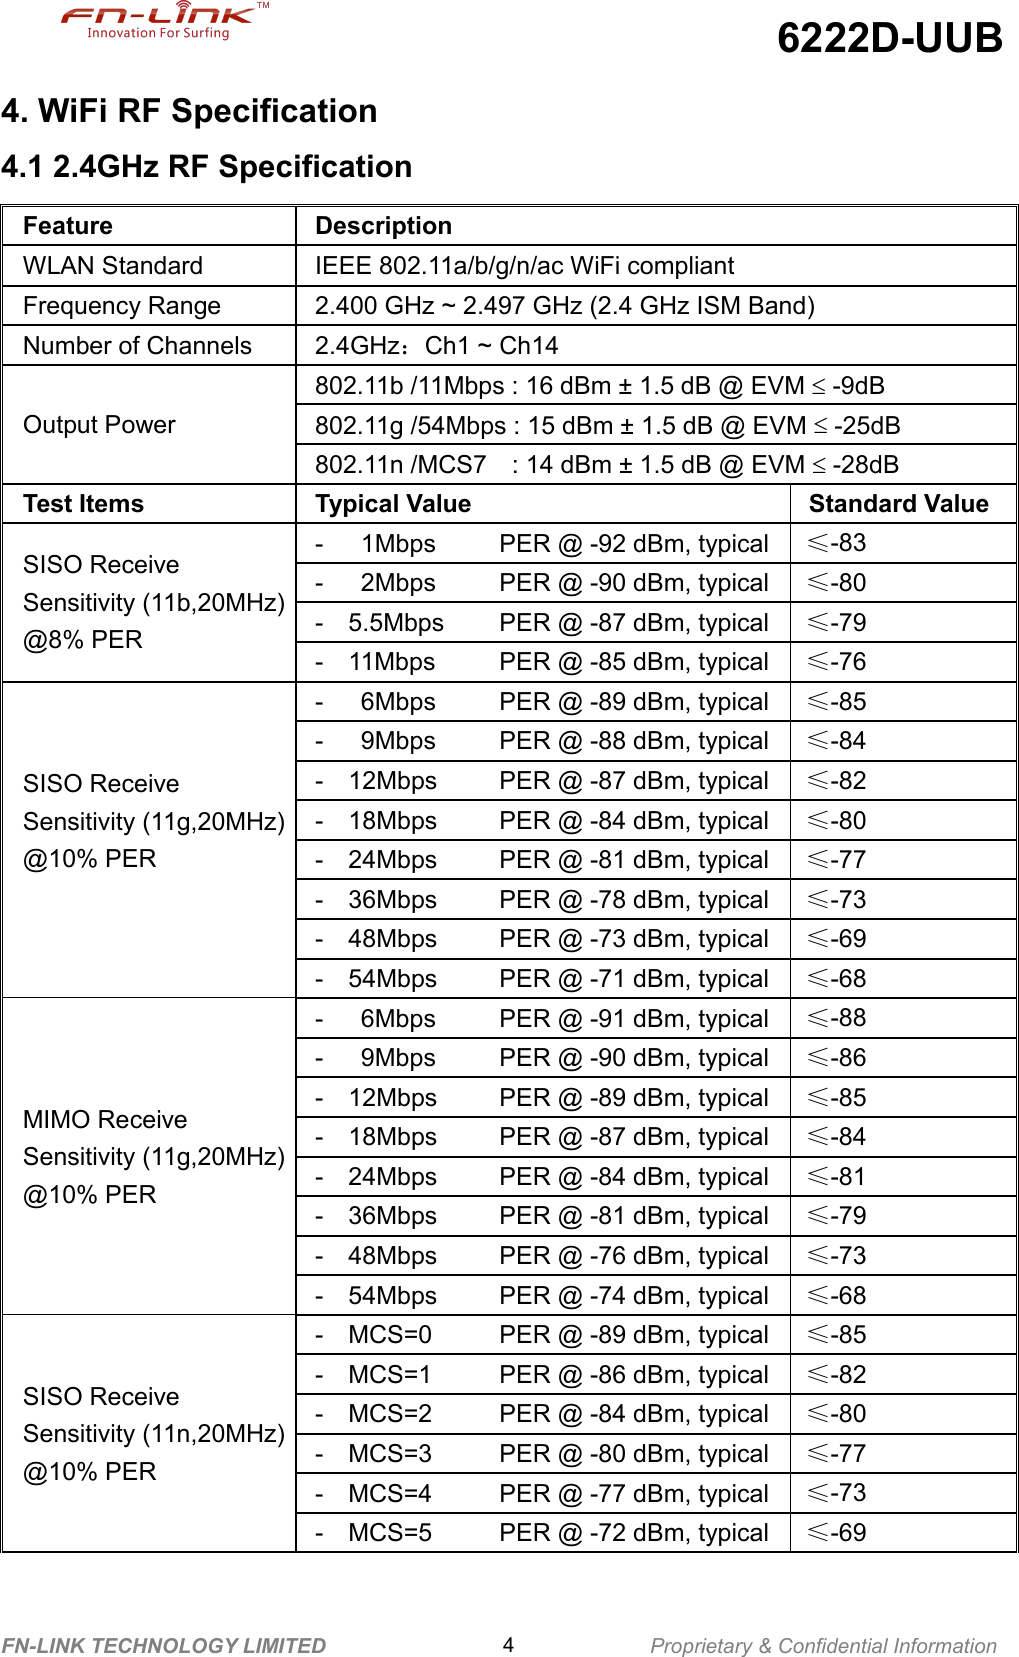 6222D-UUBFN-LINK TECHNOLOGY LIMITED 4Proprietary &amp; Confidential Information4. WiFi RF Specification4.1 2.4GHz RF SpecificationFeatureDescriptionWLAN StandardIEEE 802.11a/b/g/n/ac WiFi compliantFrequency Range2.400 GHz ~ 2.497 GHz (2.4 GHz ISM Band)Number of Channels2.4GHz：Ch1 ~ Ch14Output Power802.11b /11Mbps : 16 dBm ± 1.5 dB @ EVM -9dB802.11g /54Mbps : 15 dBm ± 1.5 dB @ EVM -25dB802.11n /MCS7 : 14 dBm ± 1.5 dB @ EVM -28dBTest ItemsTypical ValueStandard ValueSISO ReceiveSensitivity (11b,20MHz)@8% PER- 1Mbps PER @ -92 dBm, typical≤-83- 2Mbps PER @ -90 dBm, typical≤-80- 5.5Mbps PER @ -87 dBm, typical≤-79- 11Mbps PER @ -85 dBm, typical≤-76SISO ReceiveSensitivity (11g,20MHz)@10% PER- 6Mbps PER @ -89 dBm, typical≤-85- 9Mbps PER @ -88 dBm, typical≤-84- 12Mbps PER @ -87 dBm, typical≤-82- 18Mbps PER @ -84 dBm, typical≤-80- 24Mbps PER @ -81 dBm, typical≤-77- 36Mbps PER @ -78 dBm, typical≤-73- 48Mbps PER @ -73 dBm, typical≤-69- 54Mbps PER @ -71 dBm, typical≤-68MIMO ReceiveSensitivity (11g,20MHz)@10% PER- 6Mbps PER @ -91 dBm, typical≤-88- 9Mbps PER @ -90 dBm, typical≤-86- 12Mbps PER @ -89 dBm, typical≤-85- 18Mbps PER @ -87 dBm, typical≤-84- 24Mbps PER @ -84 dBm, typical≤-81- 36Mbps PER @ -81 dBm, typical≤-79- 48Mbps PER @ -76 dBm, typical≤-73- 54Mbps PER @ -74 dBm, typical≤-68SISO ReceiveSensitivity (11n,20MHz)@10% PER- MCS=0 PER @ -89 dBm, typical≤-85- MCS=1 PER @ -86 dBm, typical≤-82- MCS=2 PER @ -84 dBm, typical≤-80- MCS=3 PER @ -80 dBm, typical≤-77- MCS=4 PER @ -77 dBm, typical≤-73- MCS=5 PER @ -72 dBm, typical≤-69